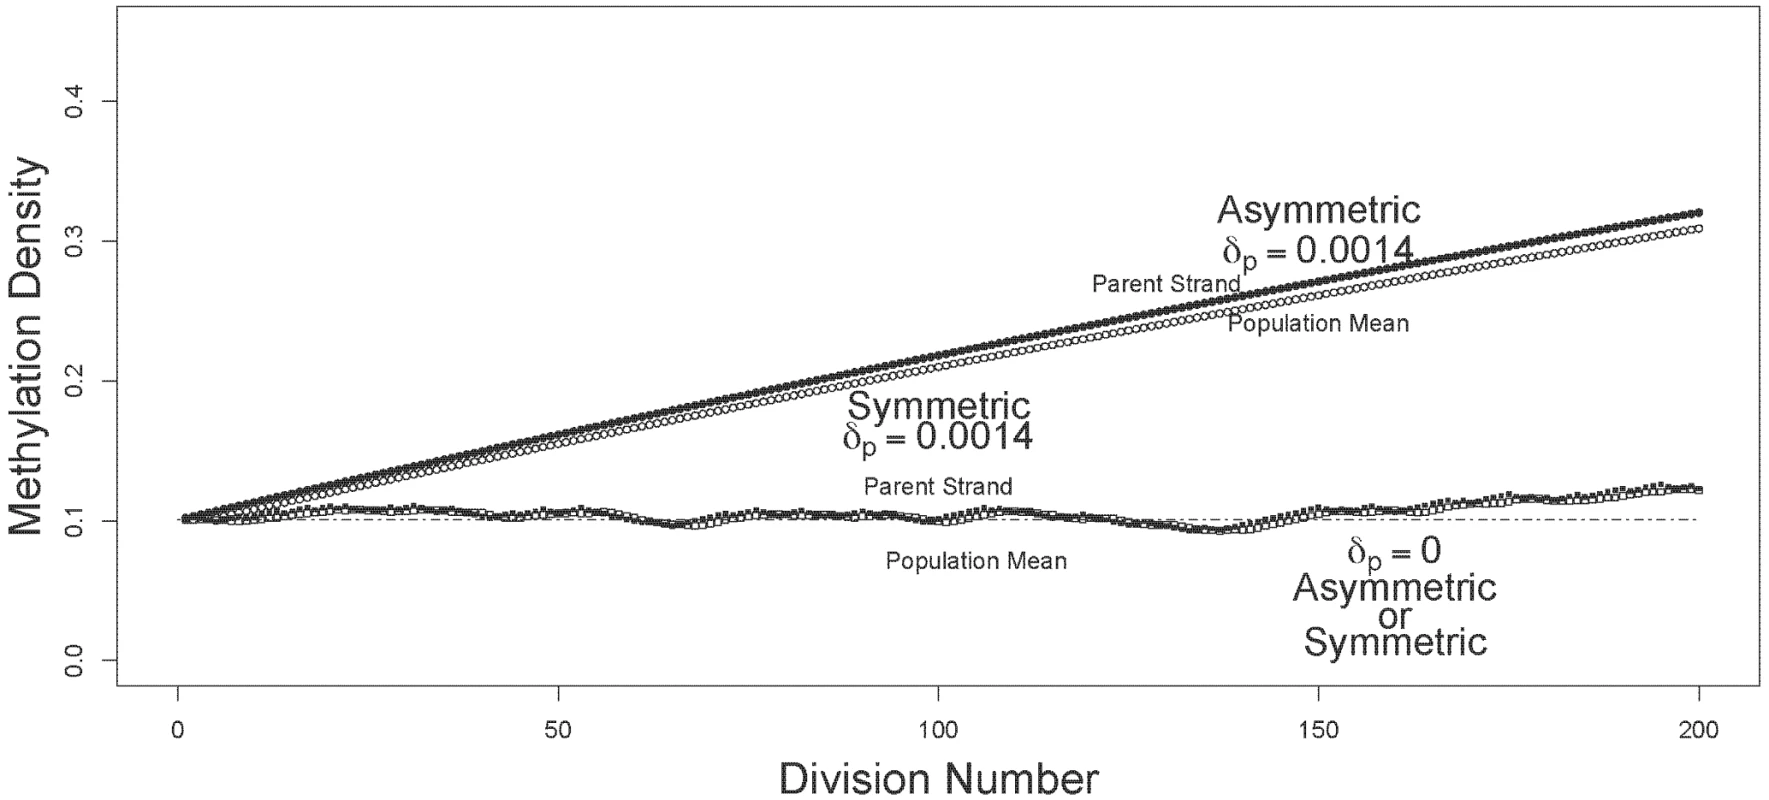 Trajectories of methylation densities under asymmetric or symmetric strand segregation, with low initial methylation density.